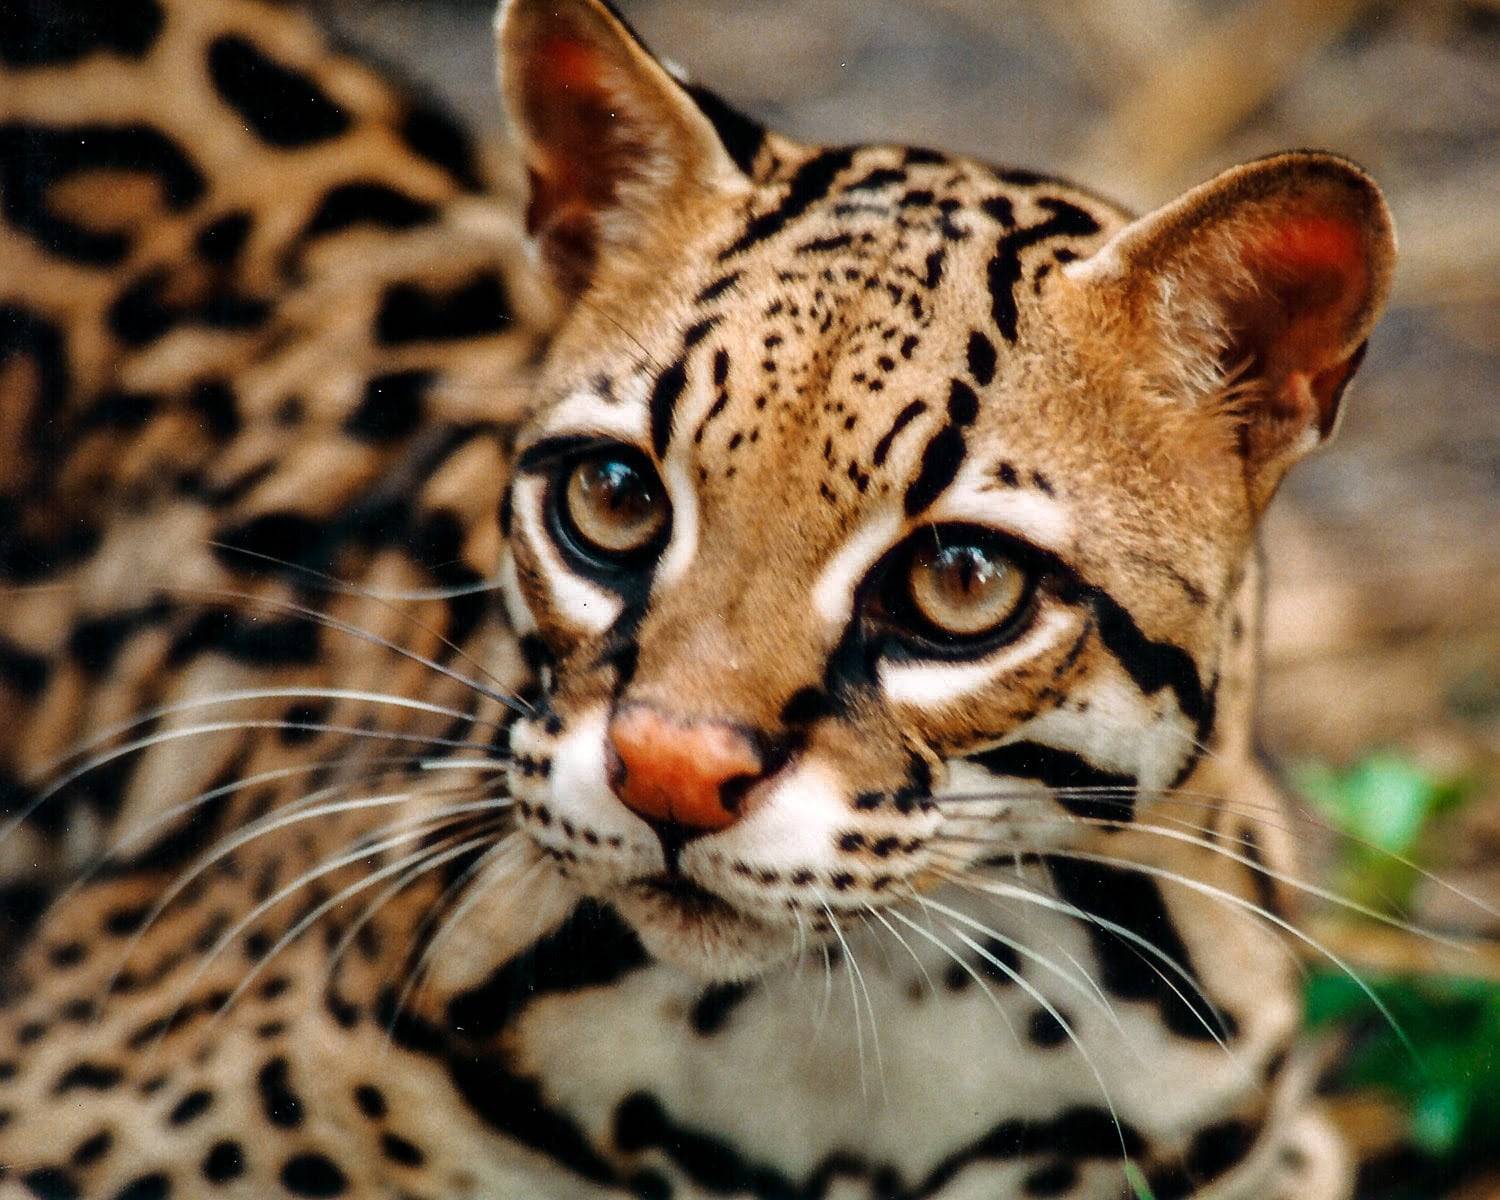 Costa Rica banned wildlife selfies